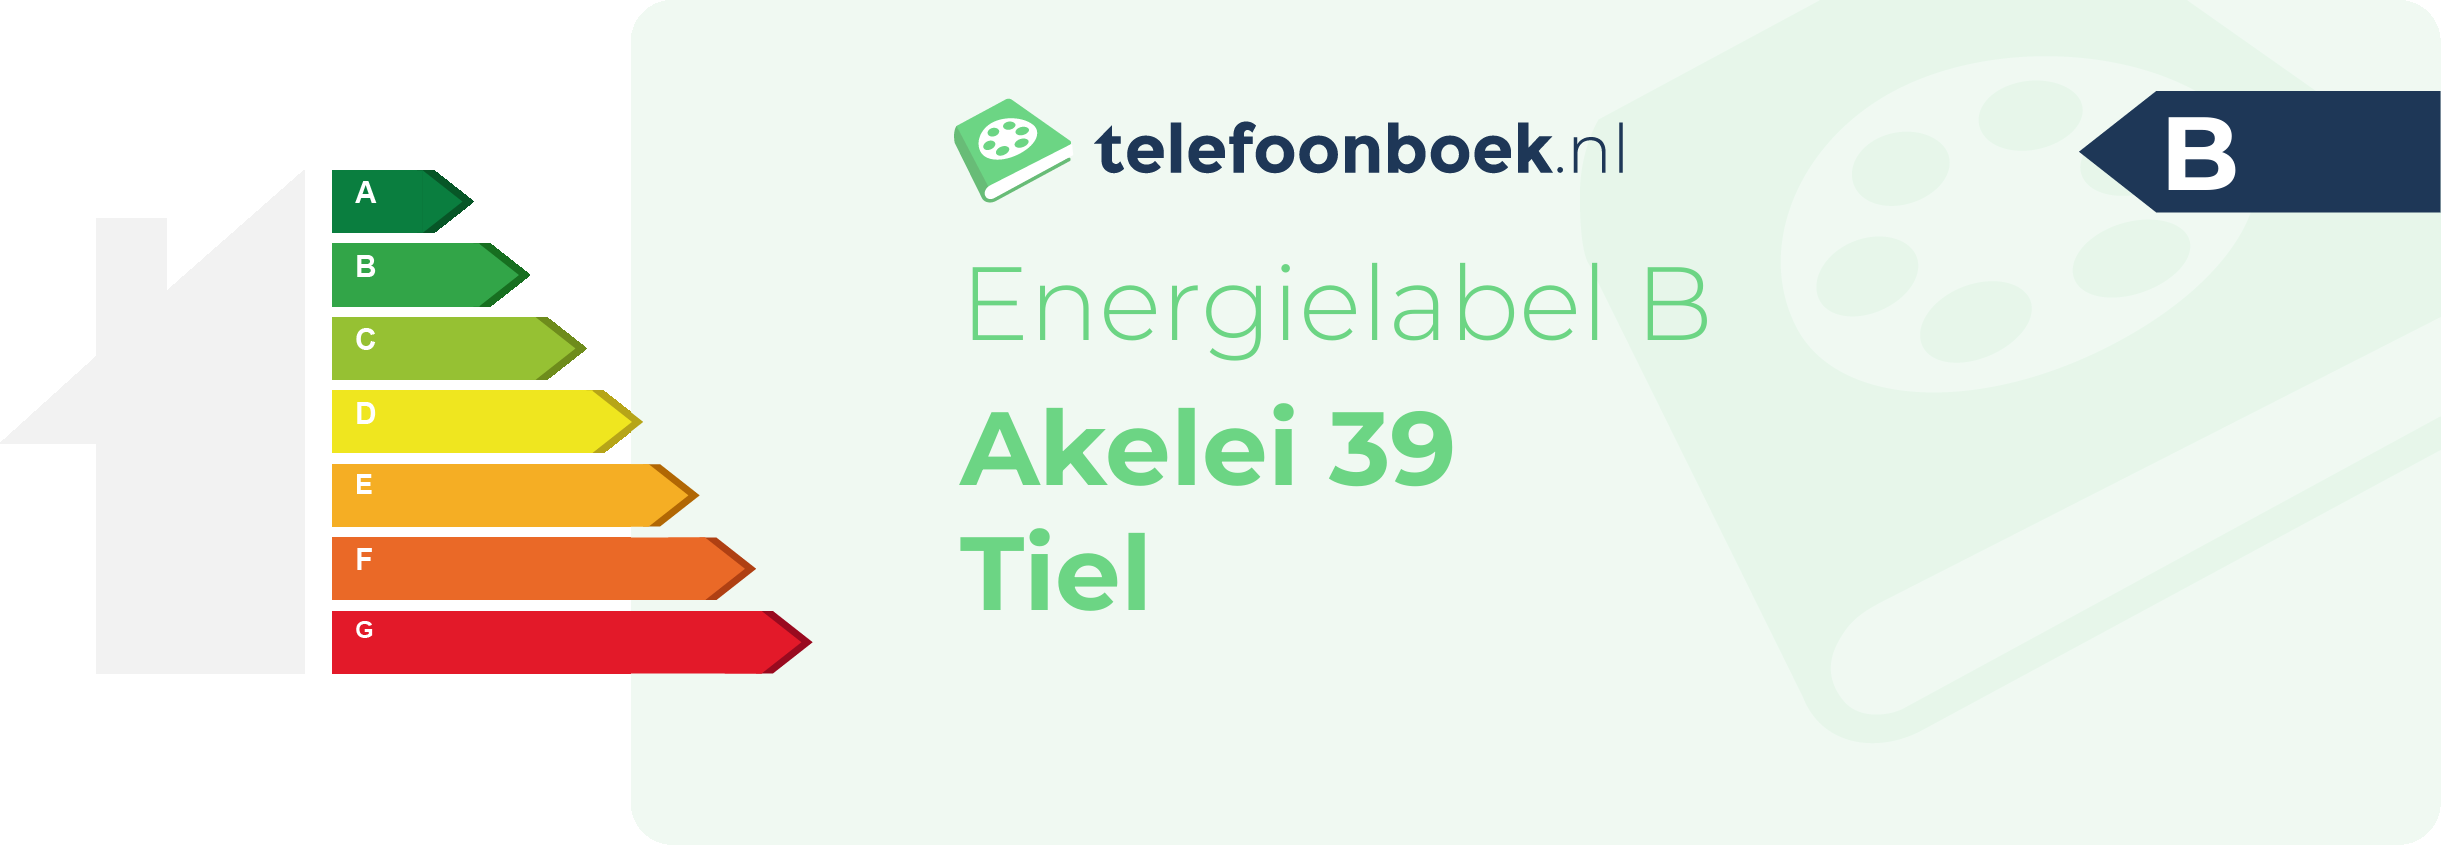 Energielabel Akelei 39 Tiel